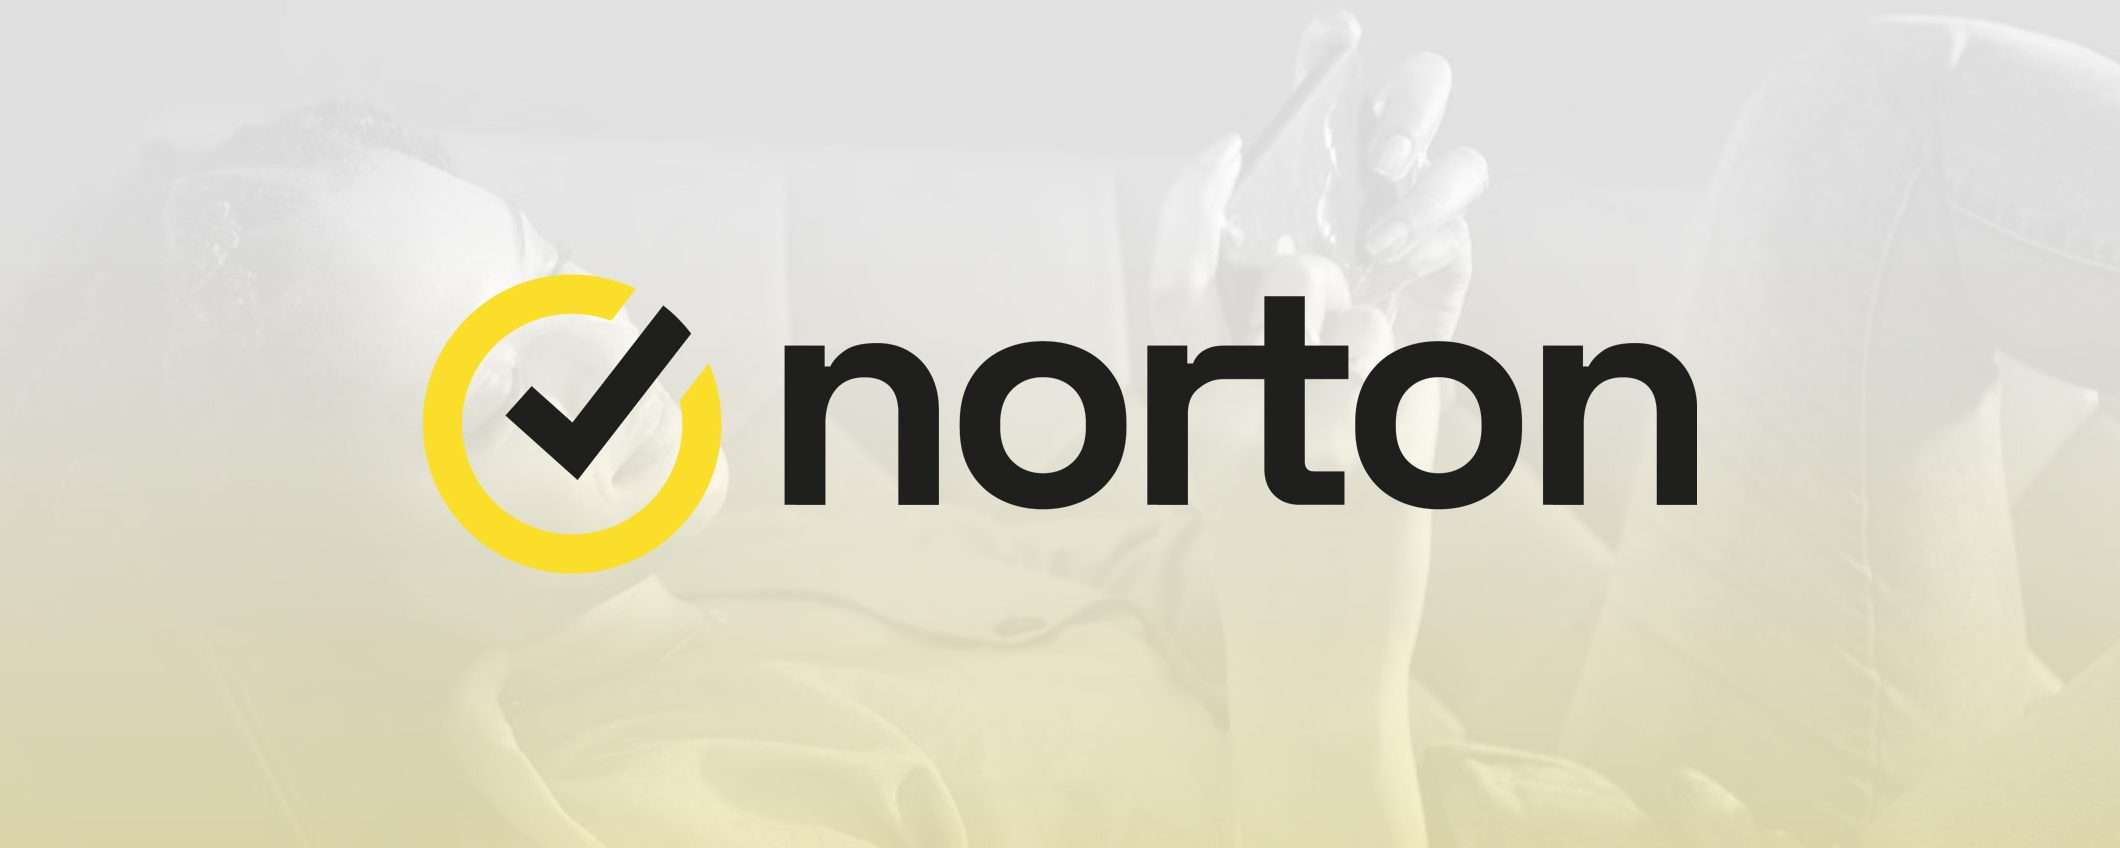 Norton 360 Premium, antivirus e VPN a soli 44,99 euro